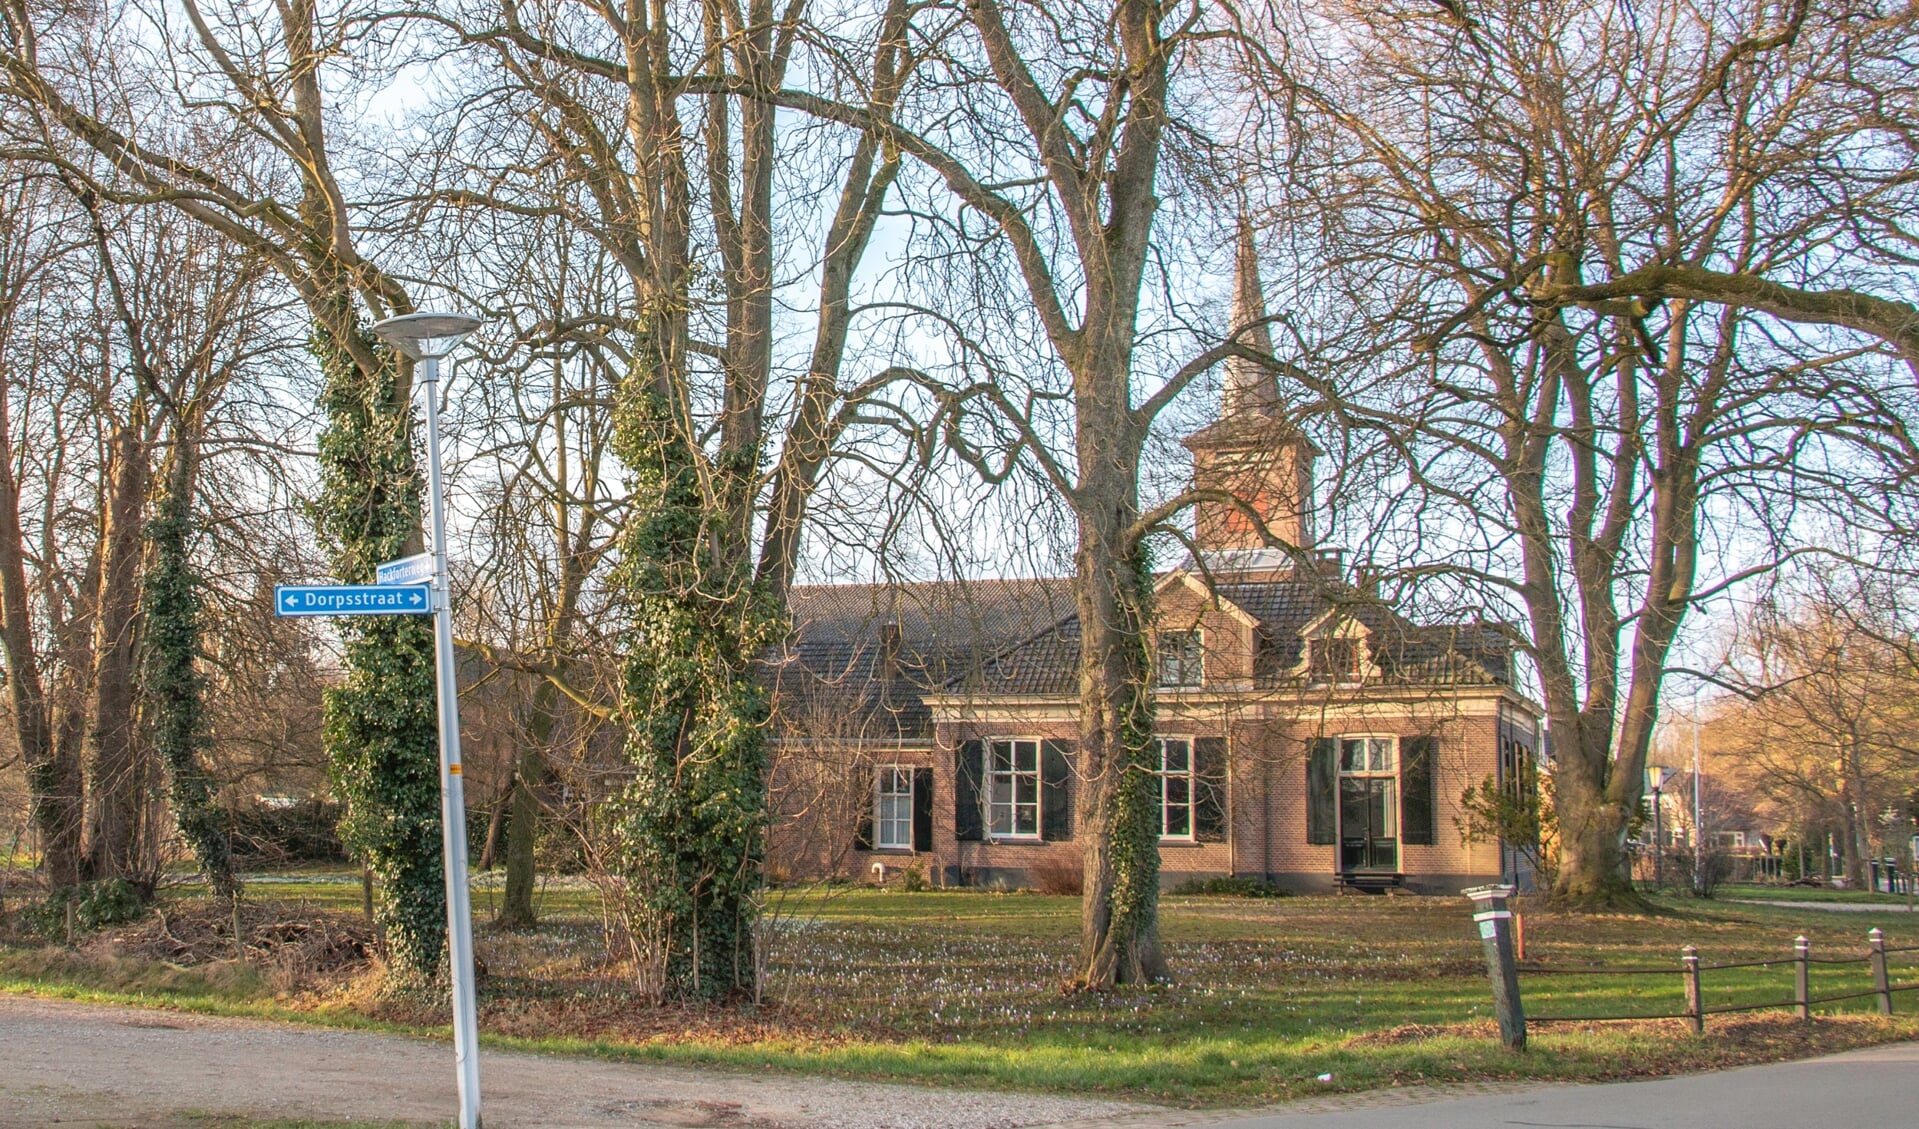 Protestantse kerk aan de Dorpsstraat 16 in Wichmond. Foto: Liesbeth Spaansen